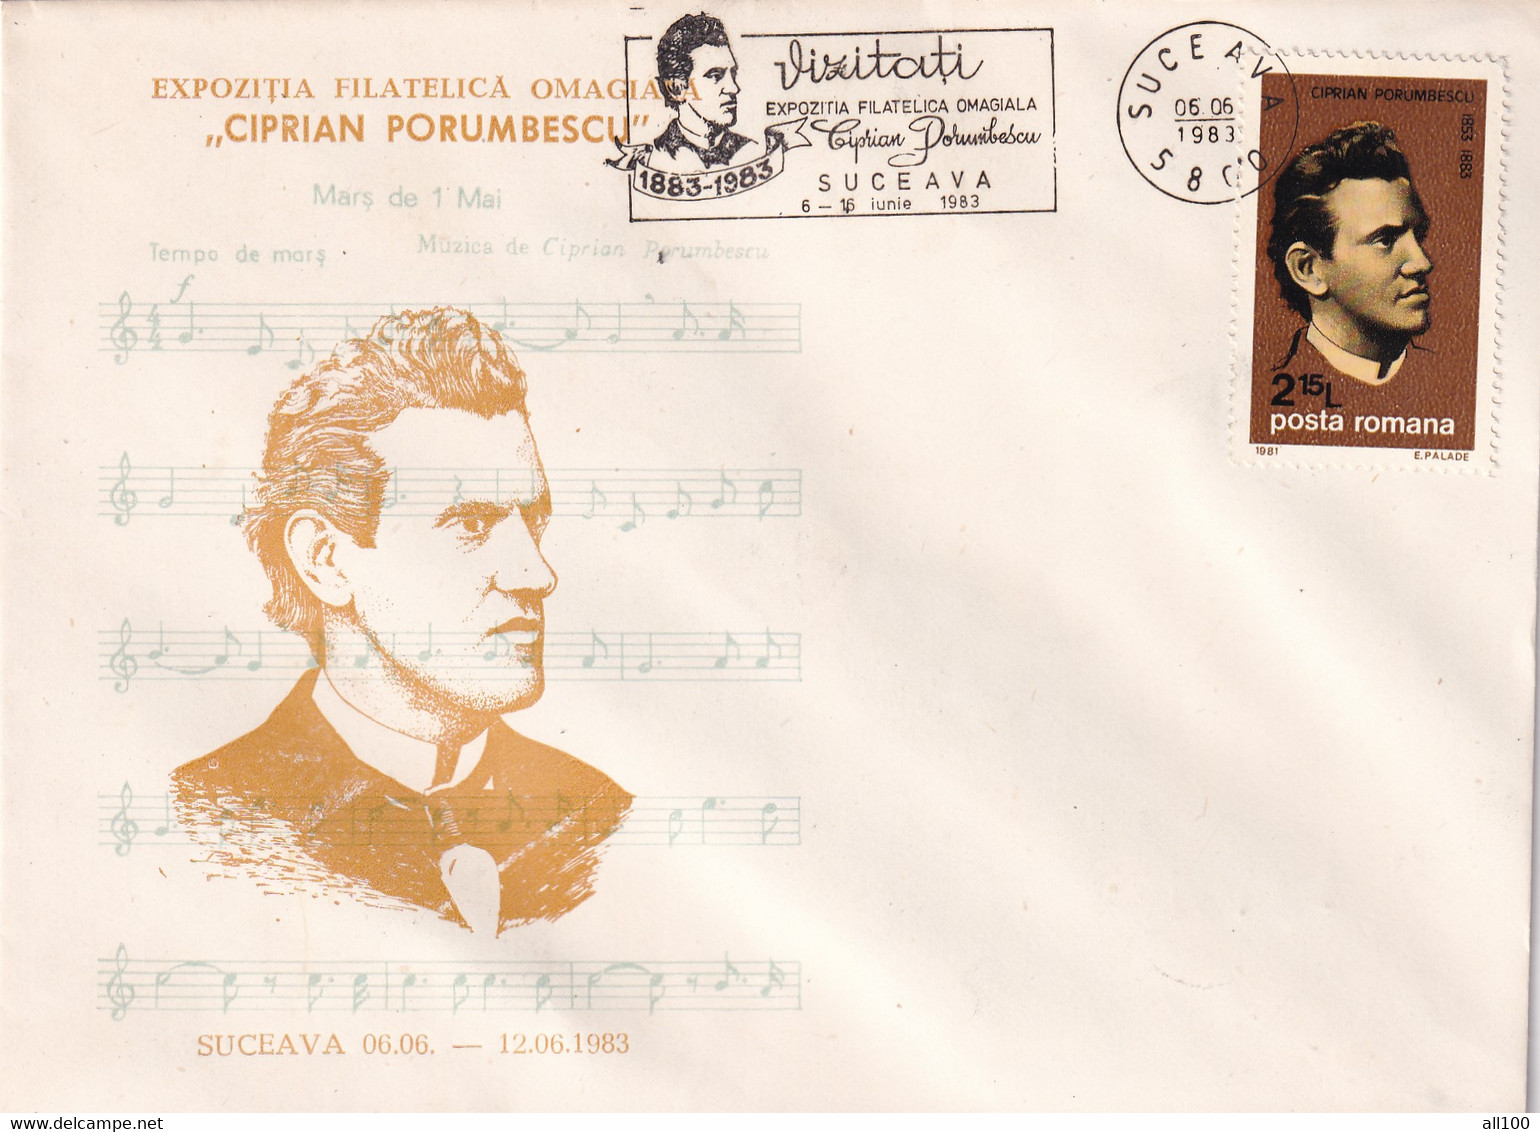 A21953 - Expozitia Filatelica Omagiala Ciprian Porumbescu Mars De 1 Mai Suceava Cover Envelope Unused 1983 RS Romania - Lettres & Documents